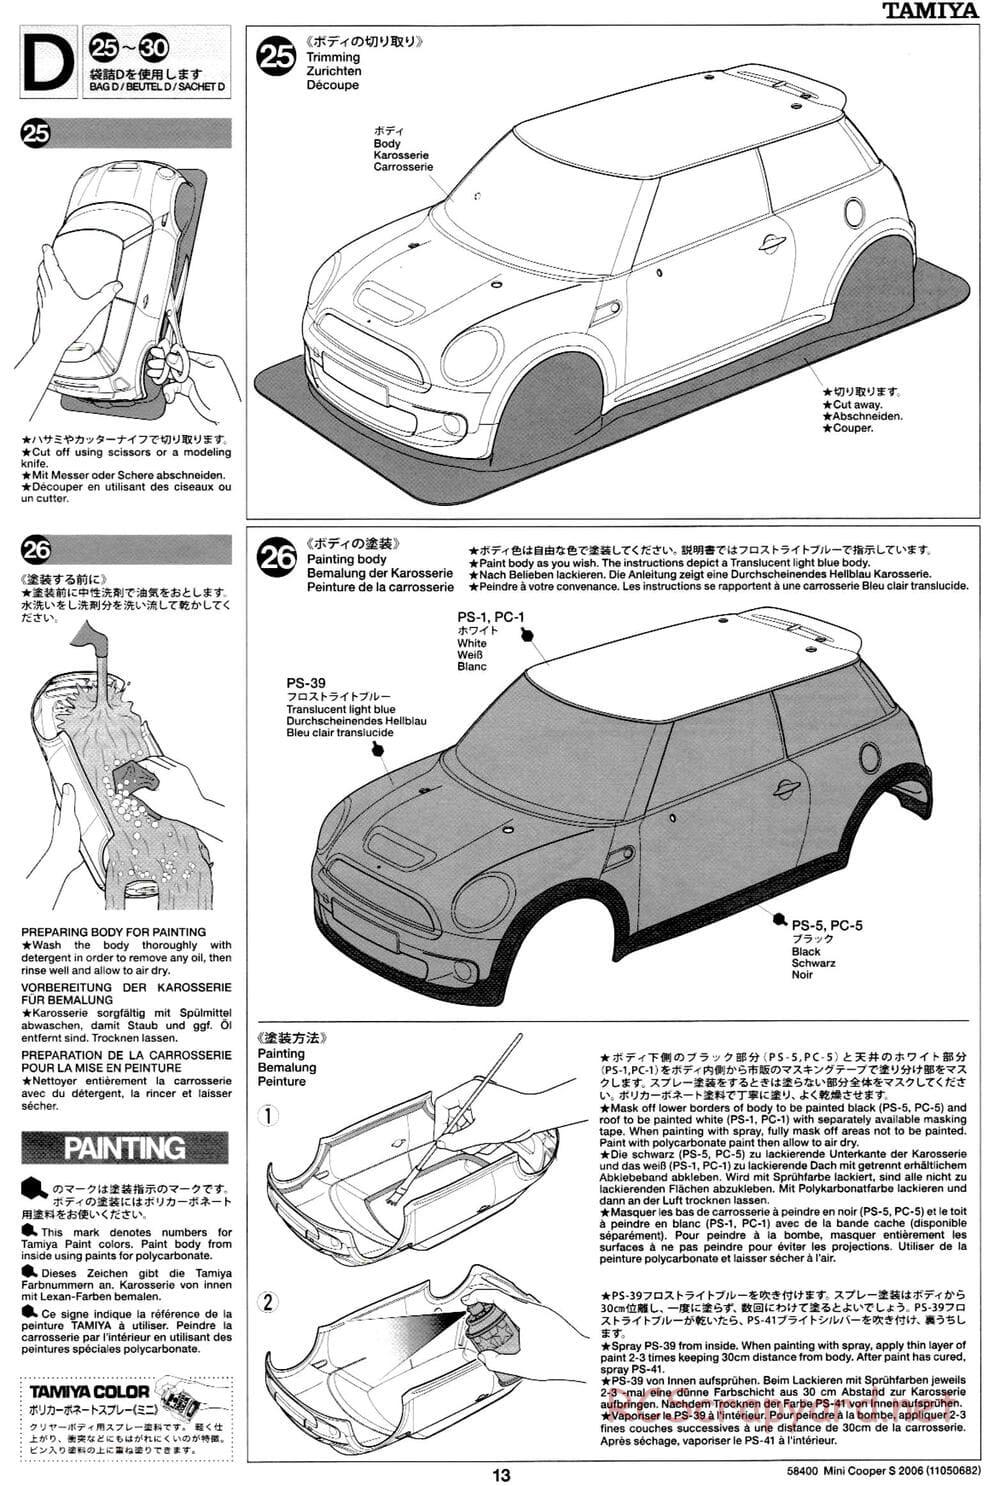 Tamiya - Mini Cooper S 2006 - M03L Chassis - Manual - Page 13